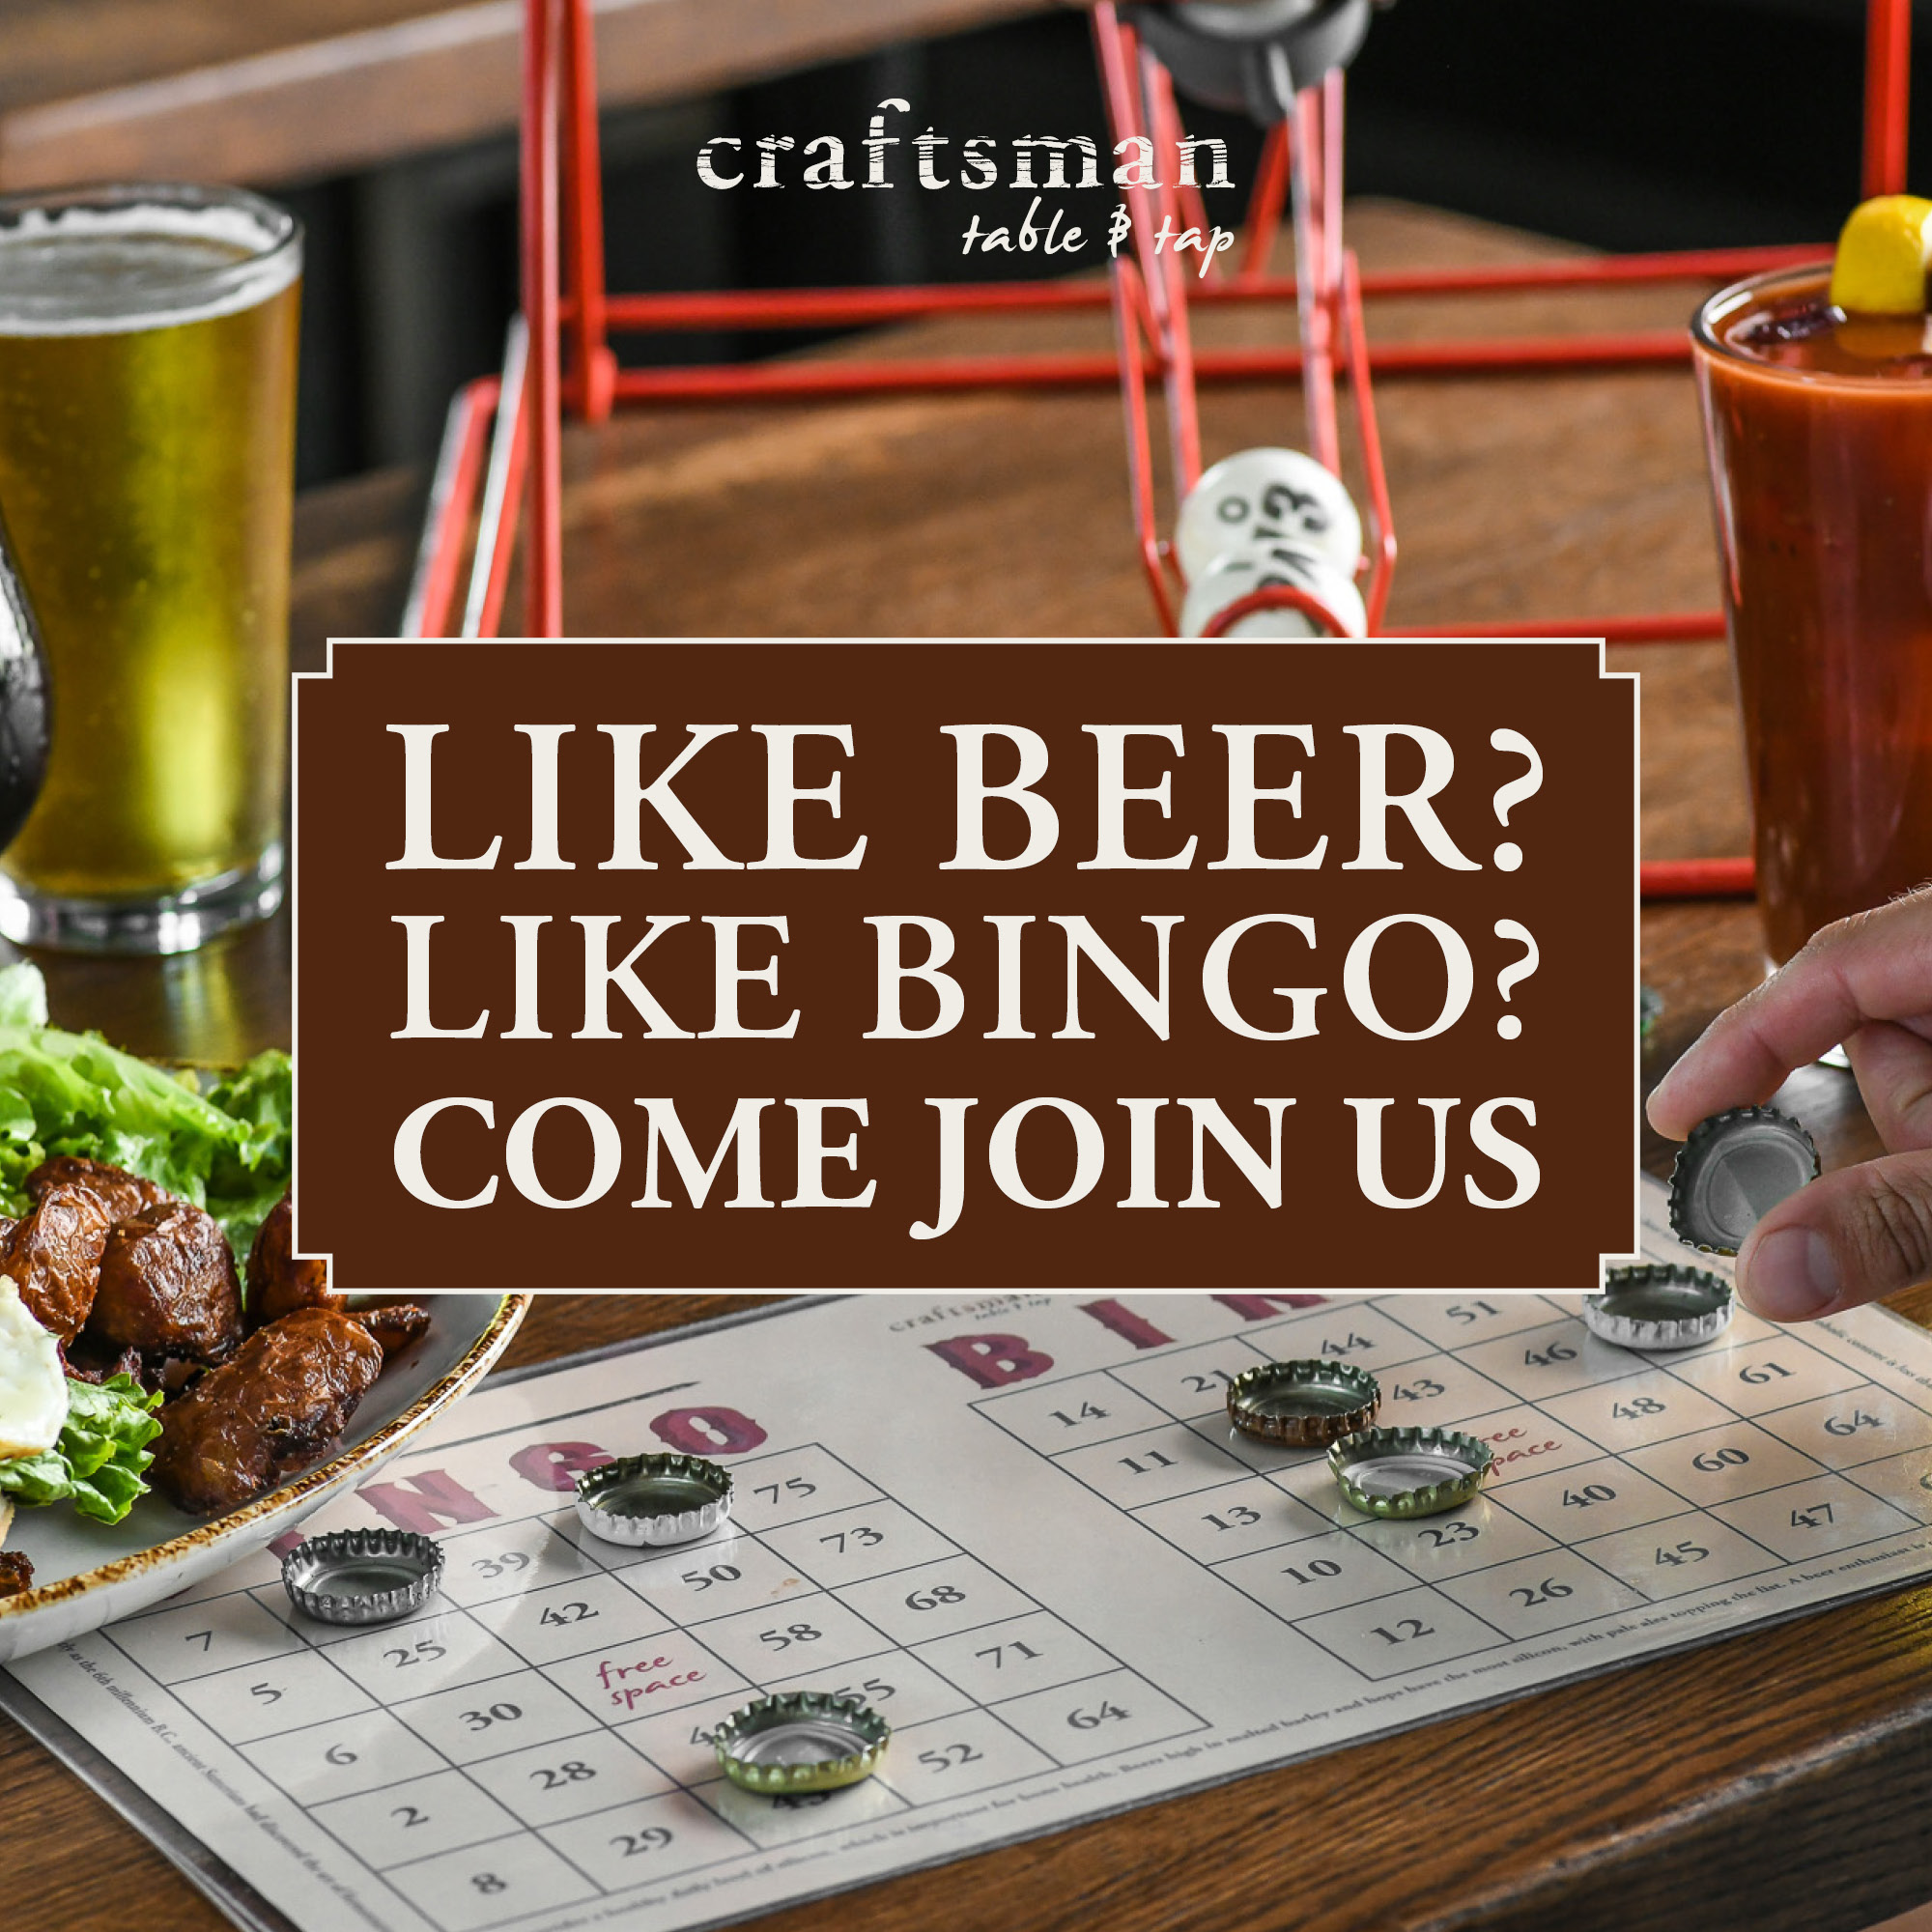 Craftman like beer like bingo come join us.